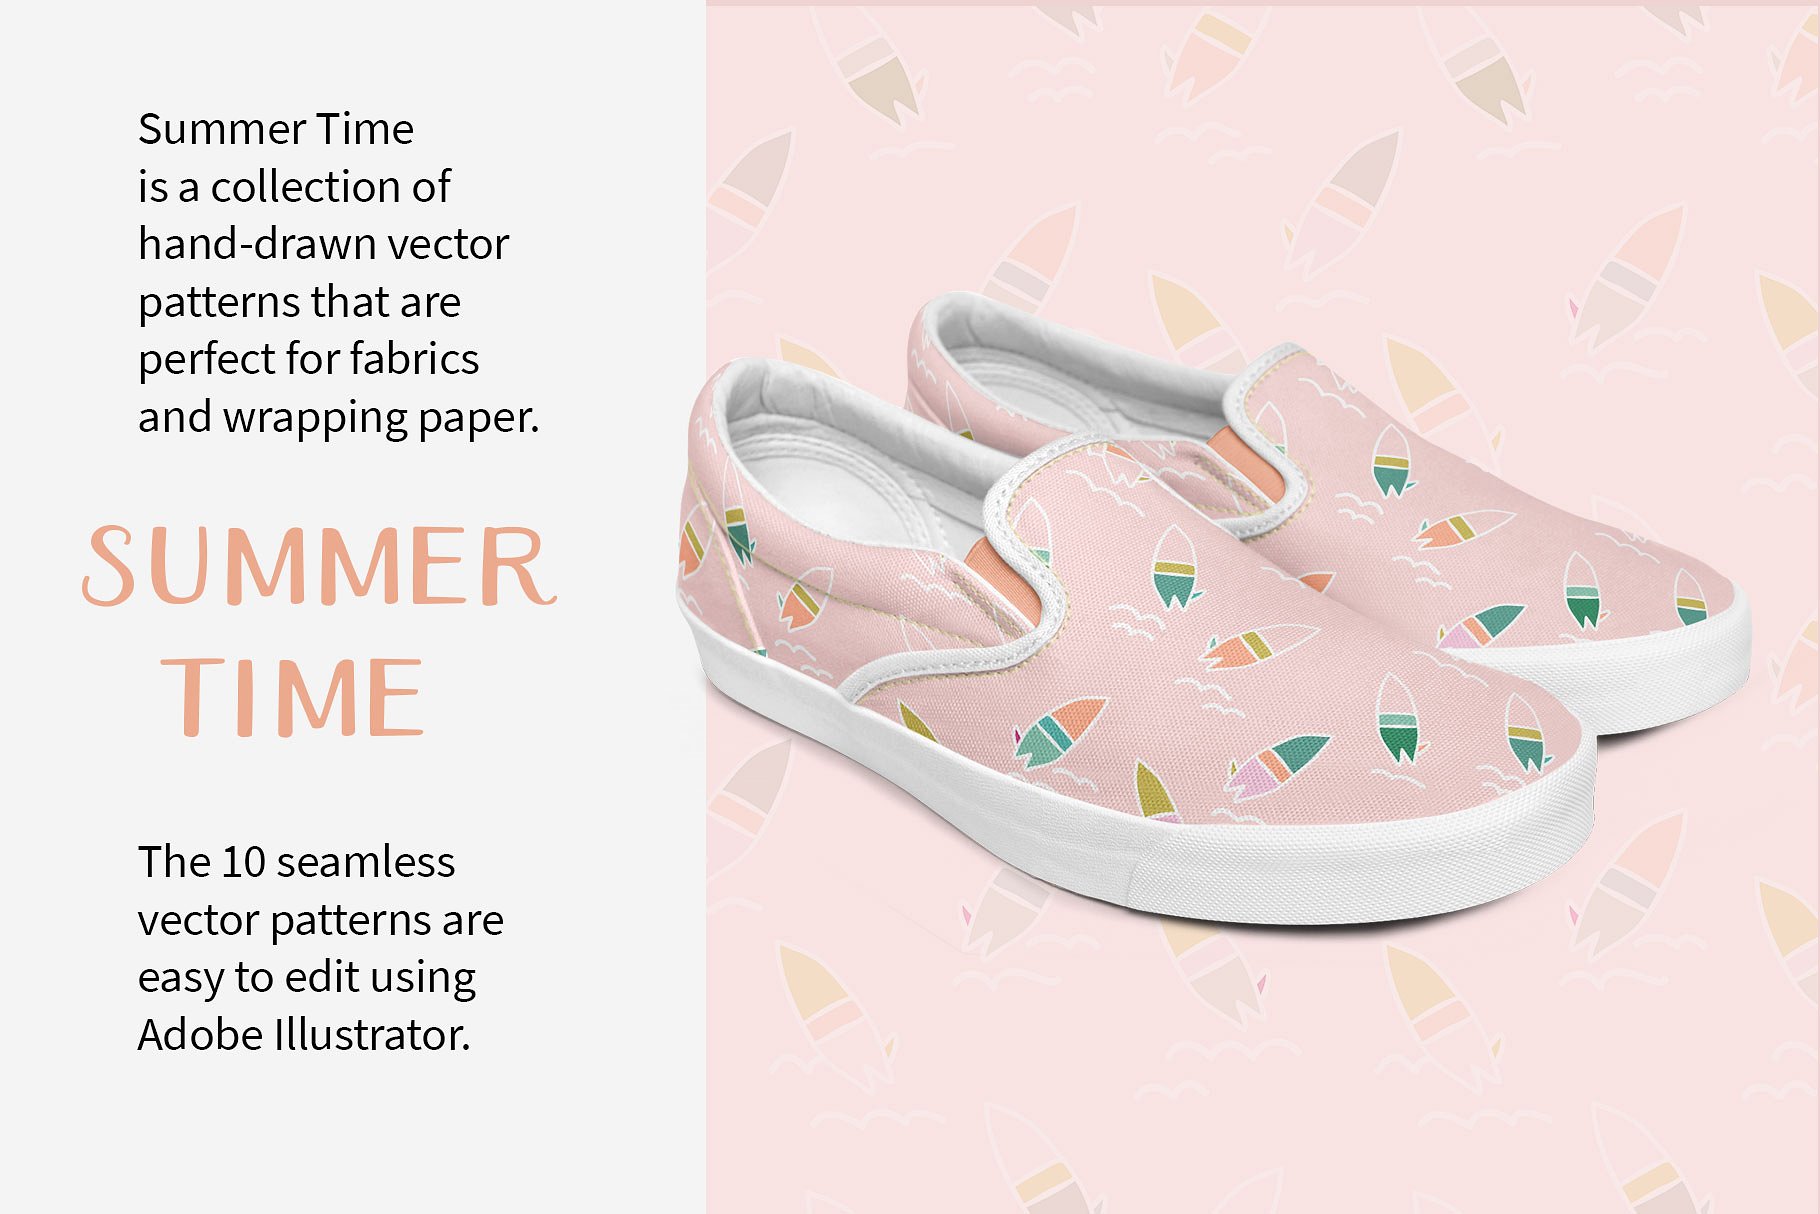 夏日色彩斑斓图案纹理 Summer Time Vector Patterns插图(2)